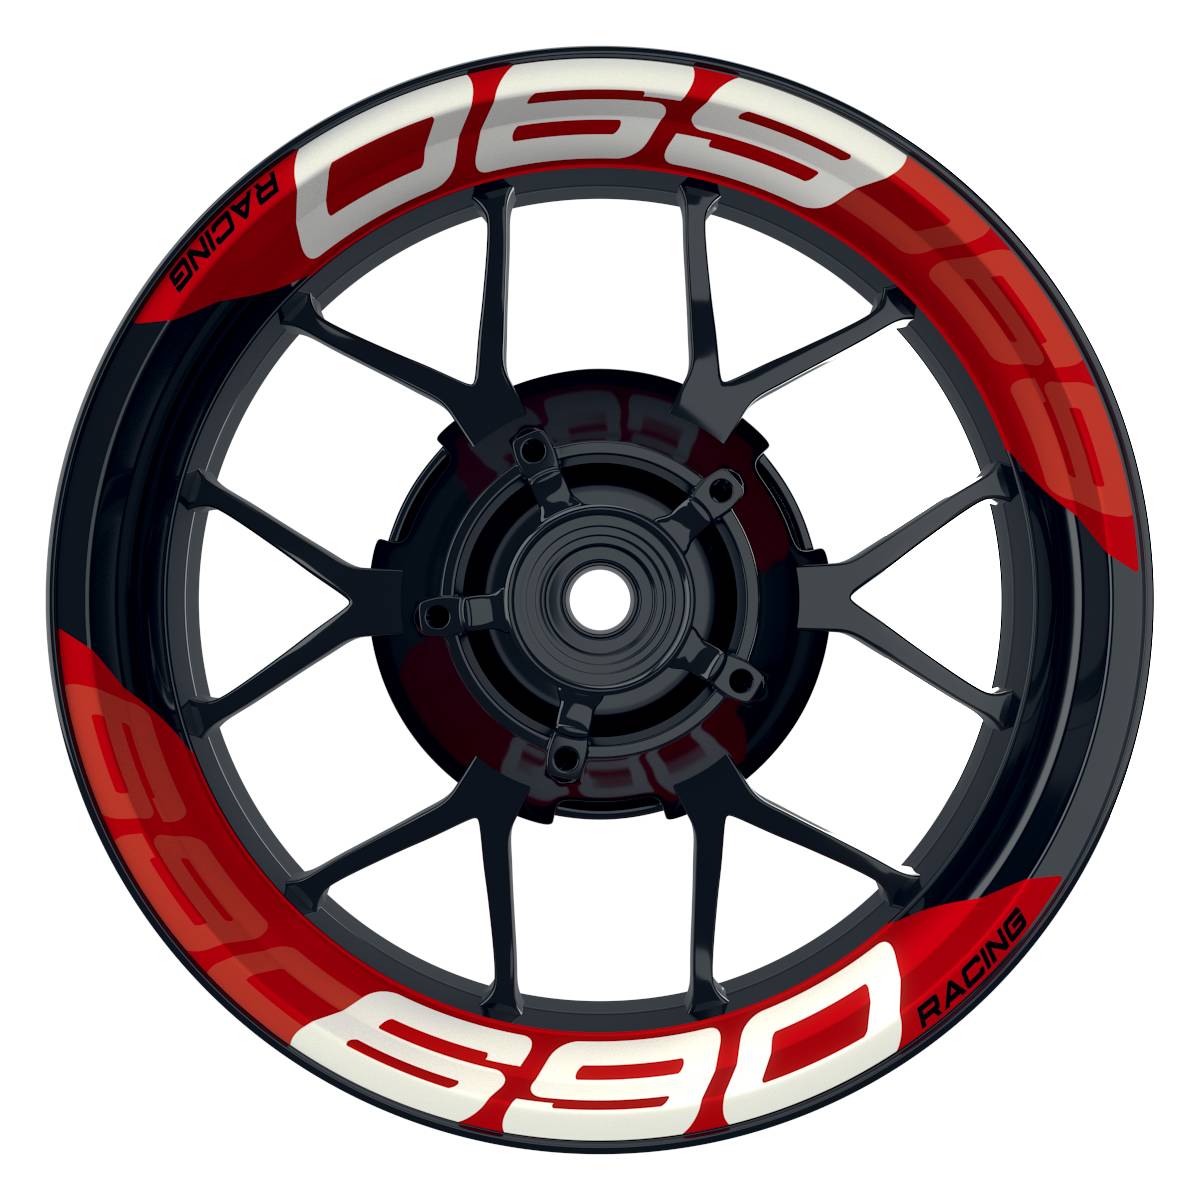 Wheelsticker Felgenaufkleber KTM Racing 690 einfarbig V2 rot Frontansicht